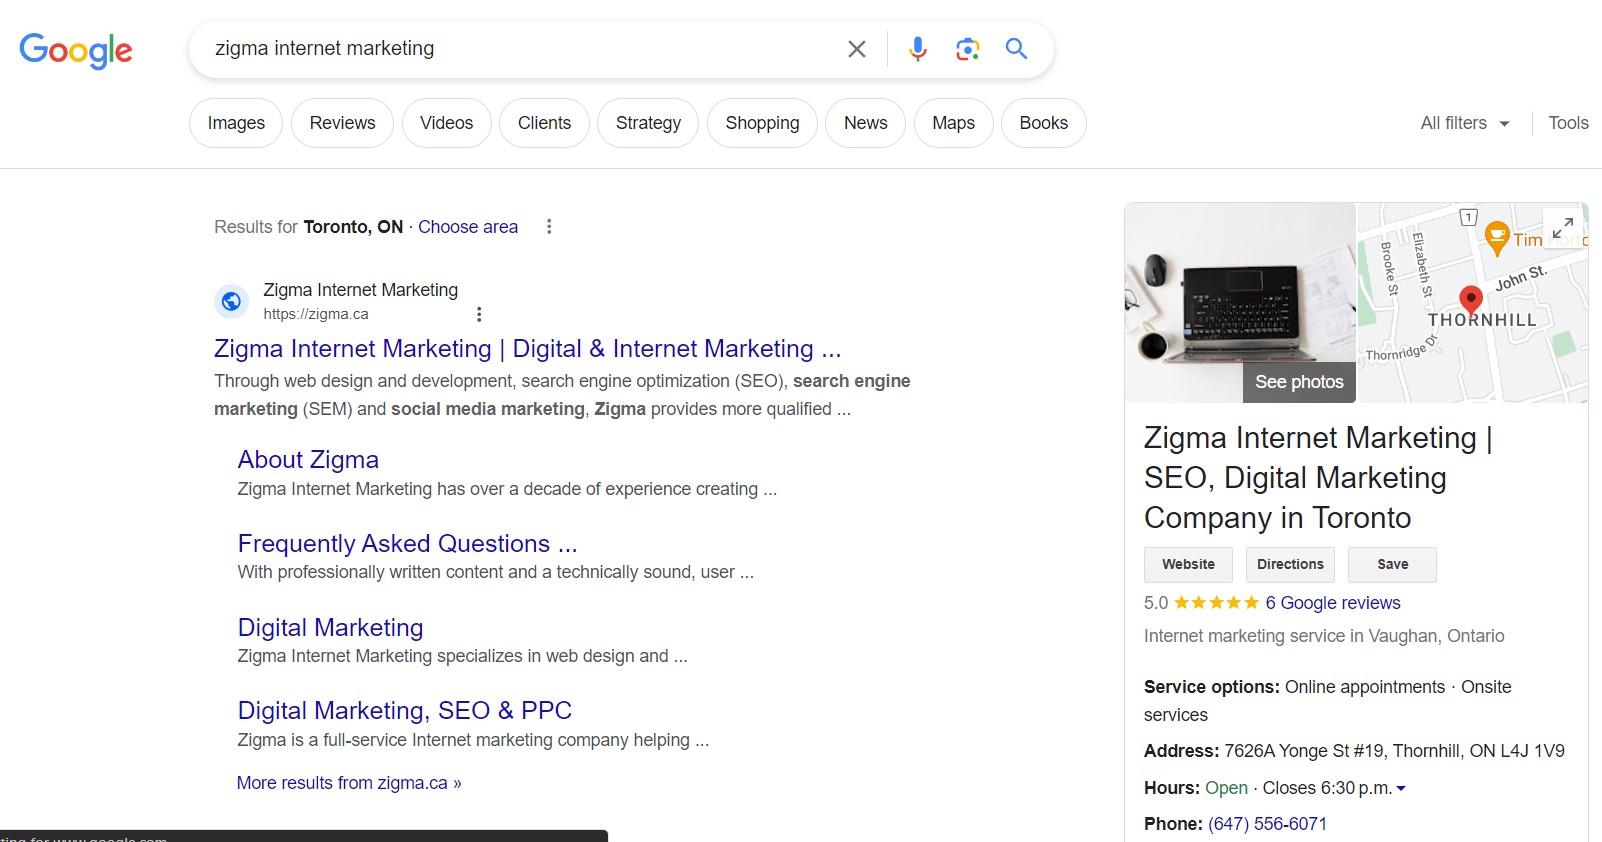 GBP - Zigma Internet Marketing